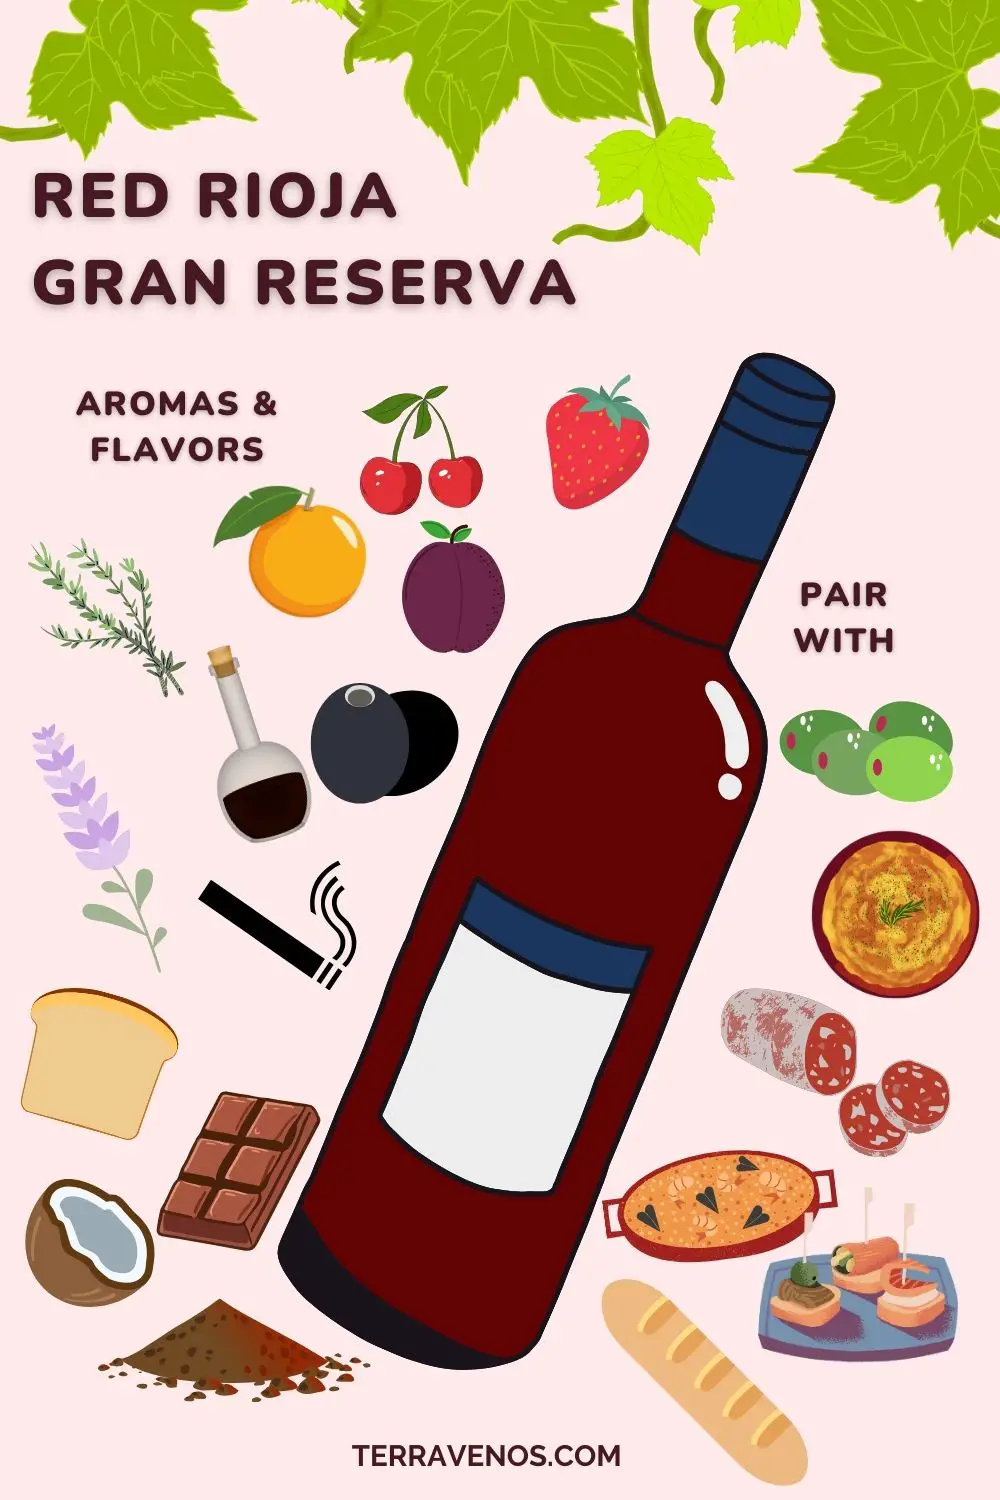 Rioja gran reserva taste and pairing infographic - rioja wine taste